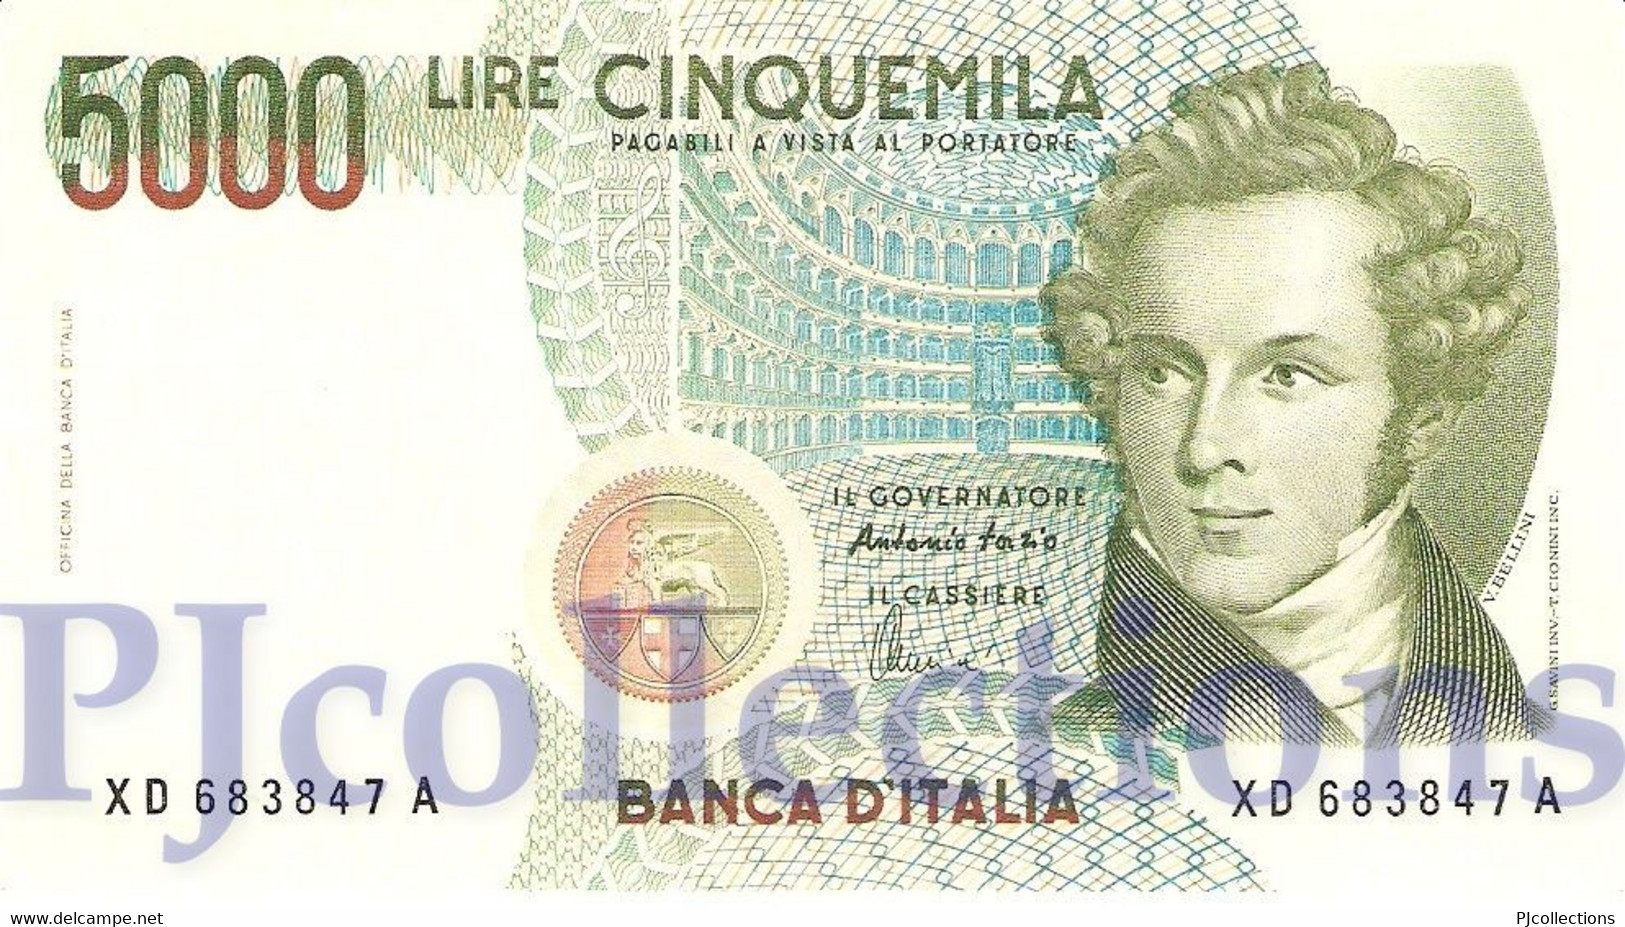 ITALIA - ITALY 5000 LIRE 1985 PICK 111c AU+ PREFIX "XD" REPLACEMENT - 5.000 Lire